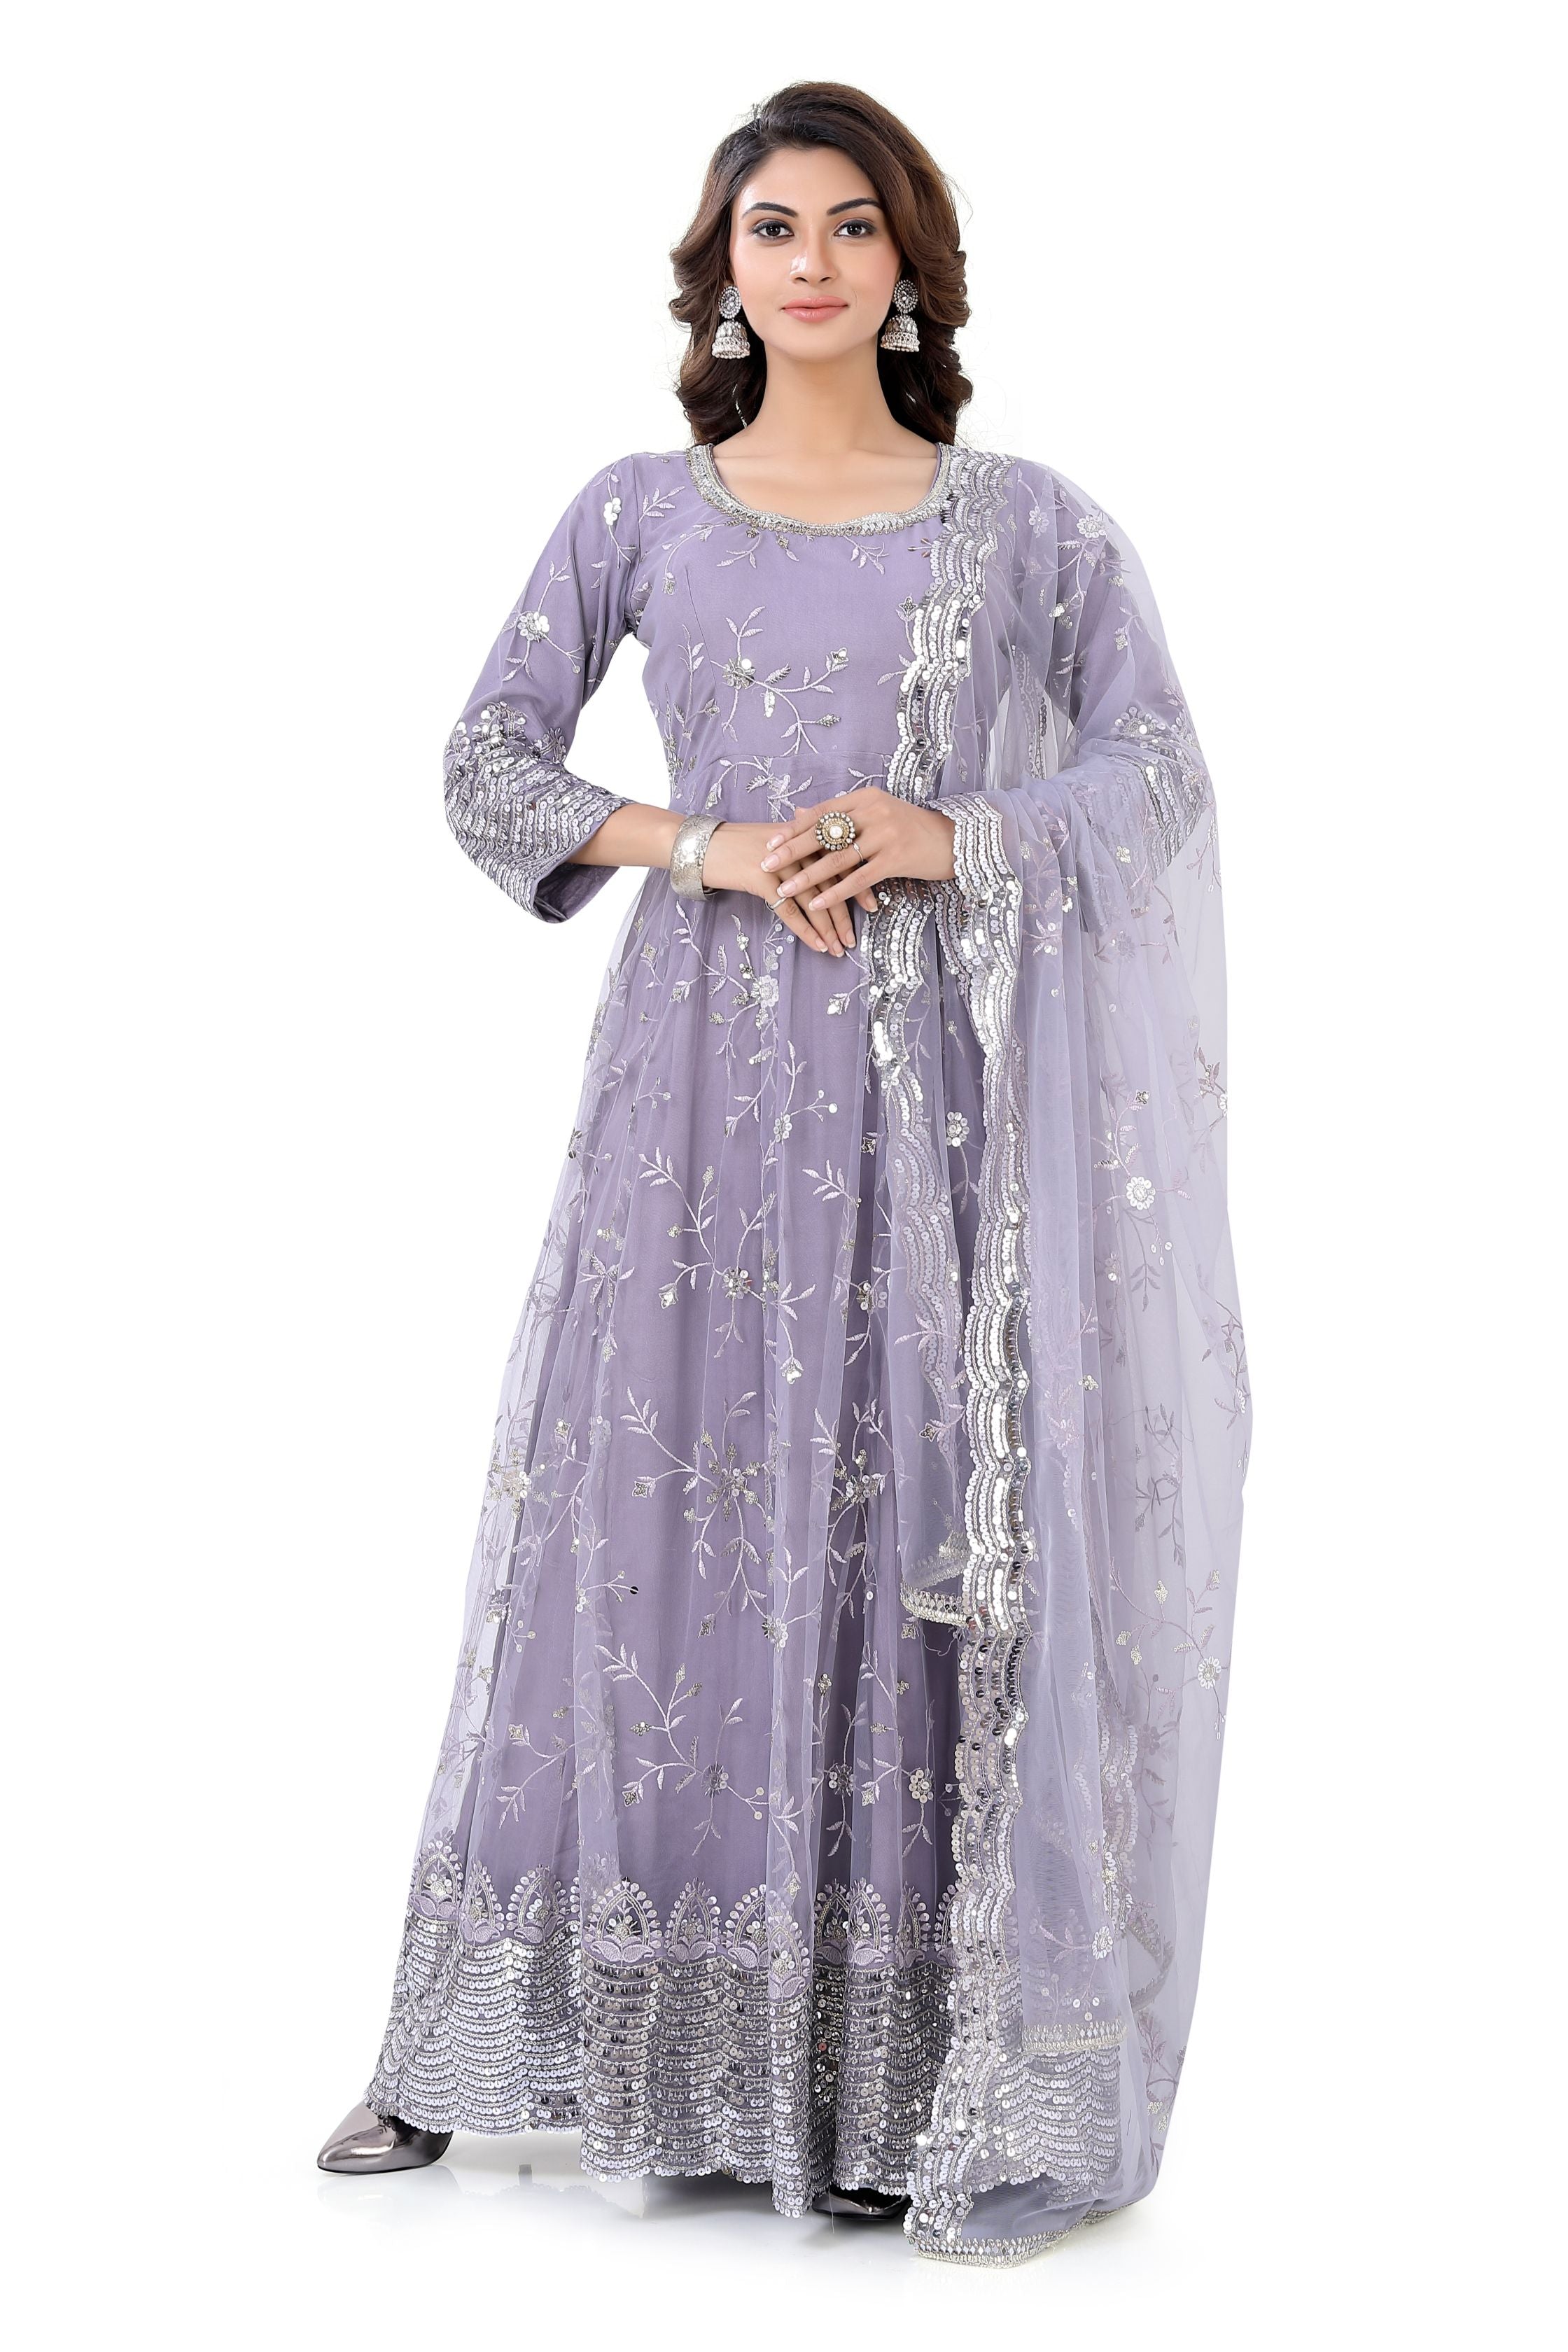 Mauve Anarkali Dress - Premium Festive Wear from Dulhan Exclusives - Just $229! Shop now at Dulhan Exclusives